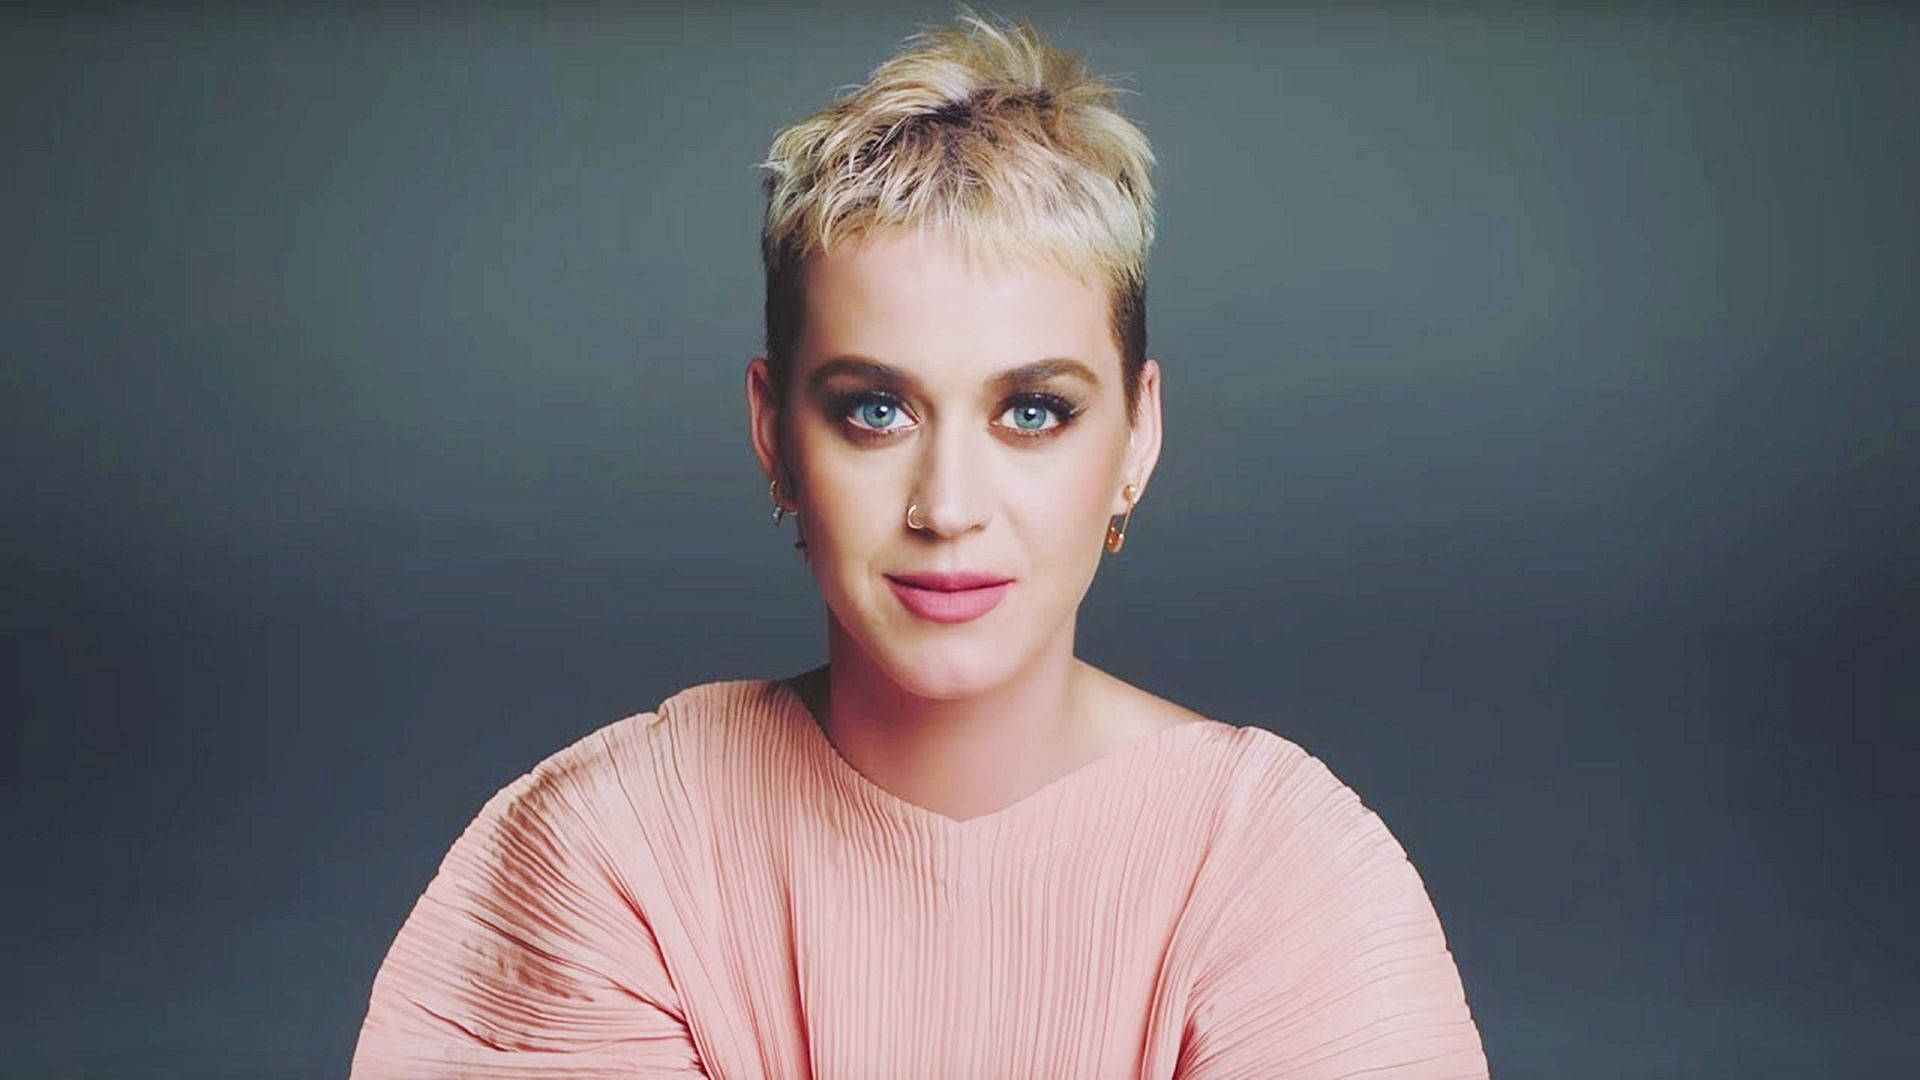 Simple Katy Perry Pixie Cut Portrait Background